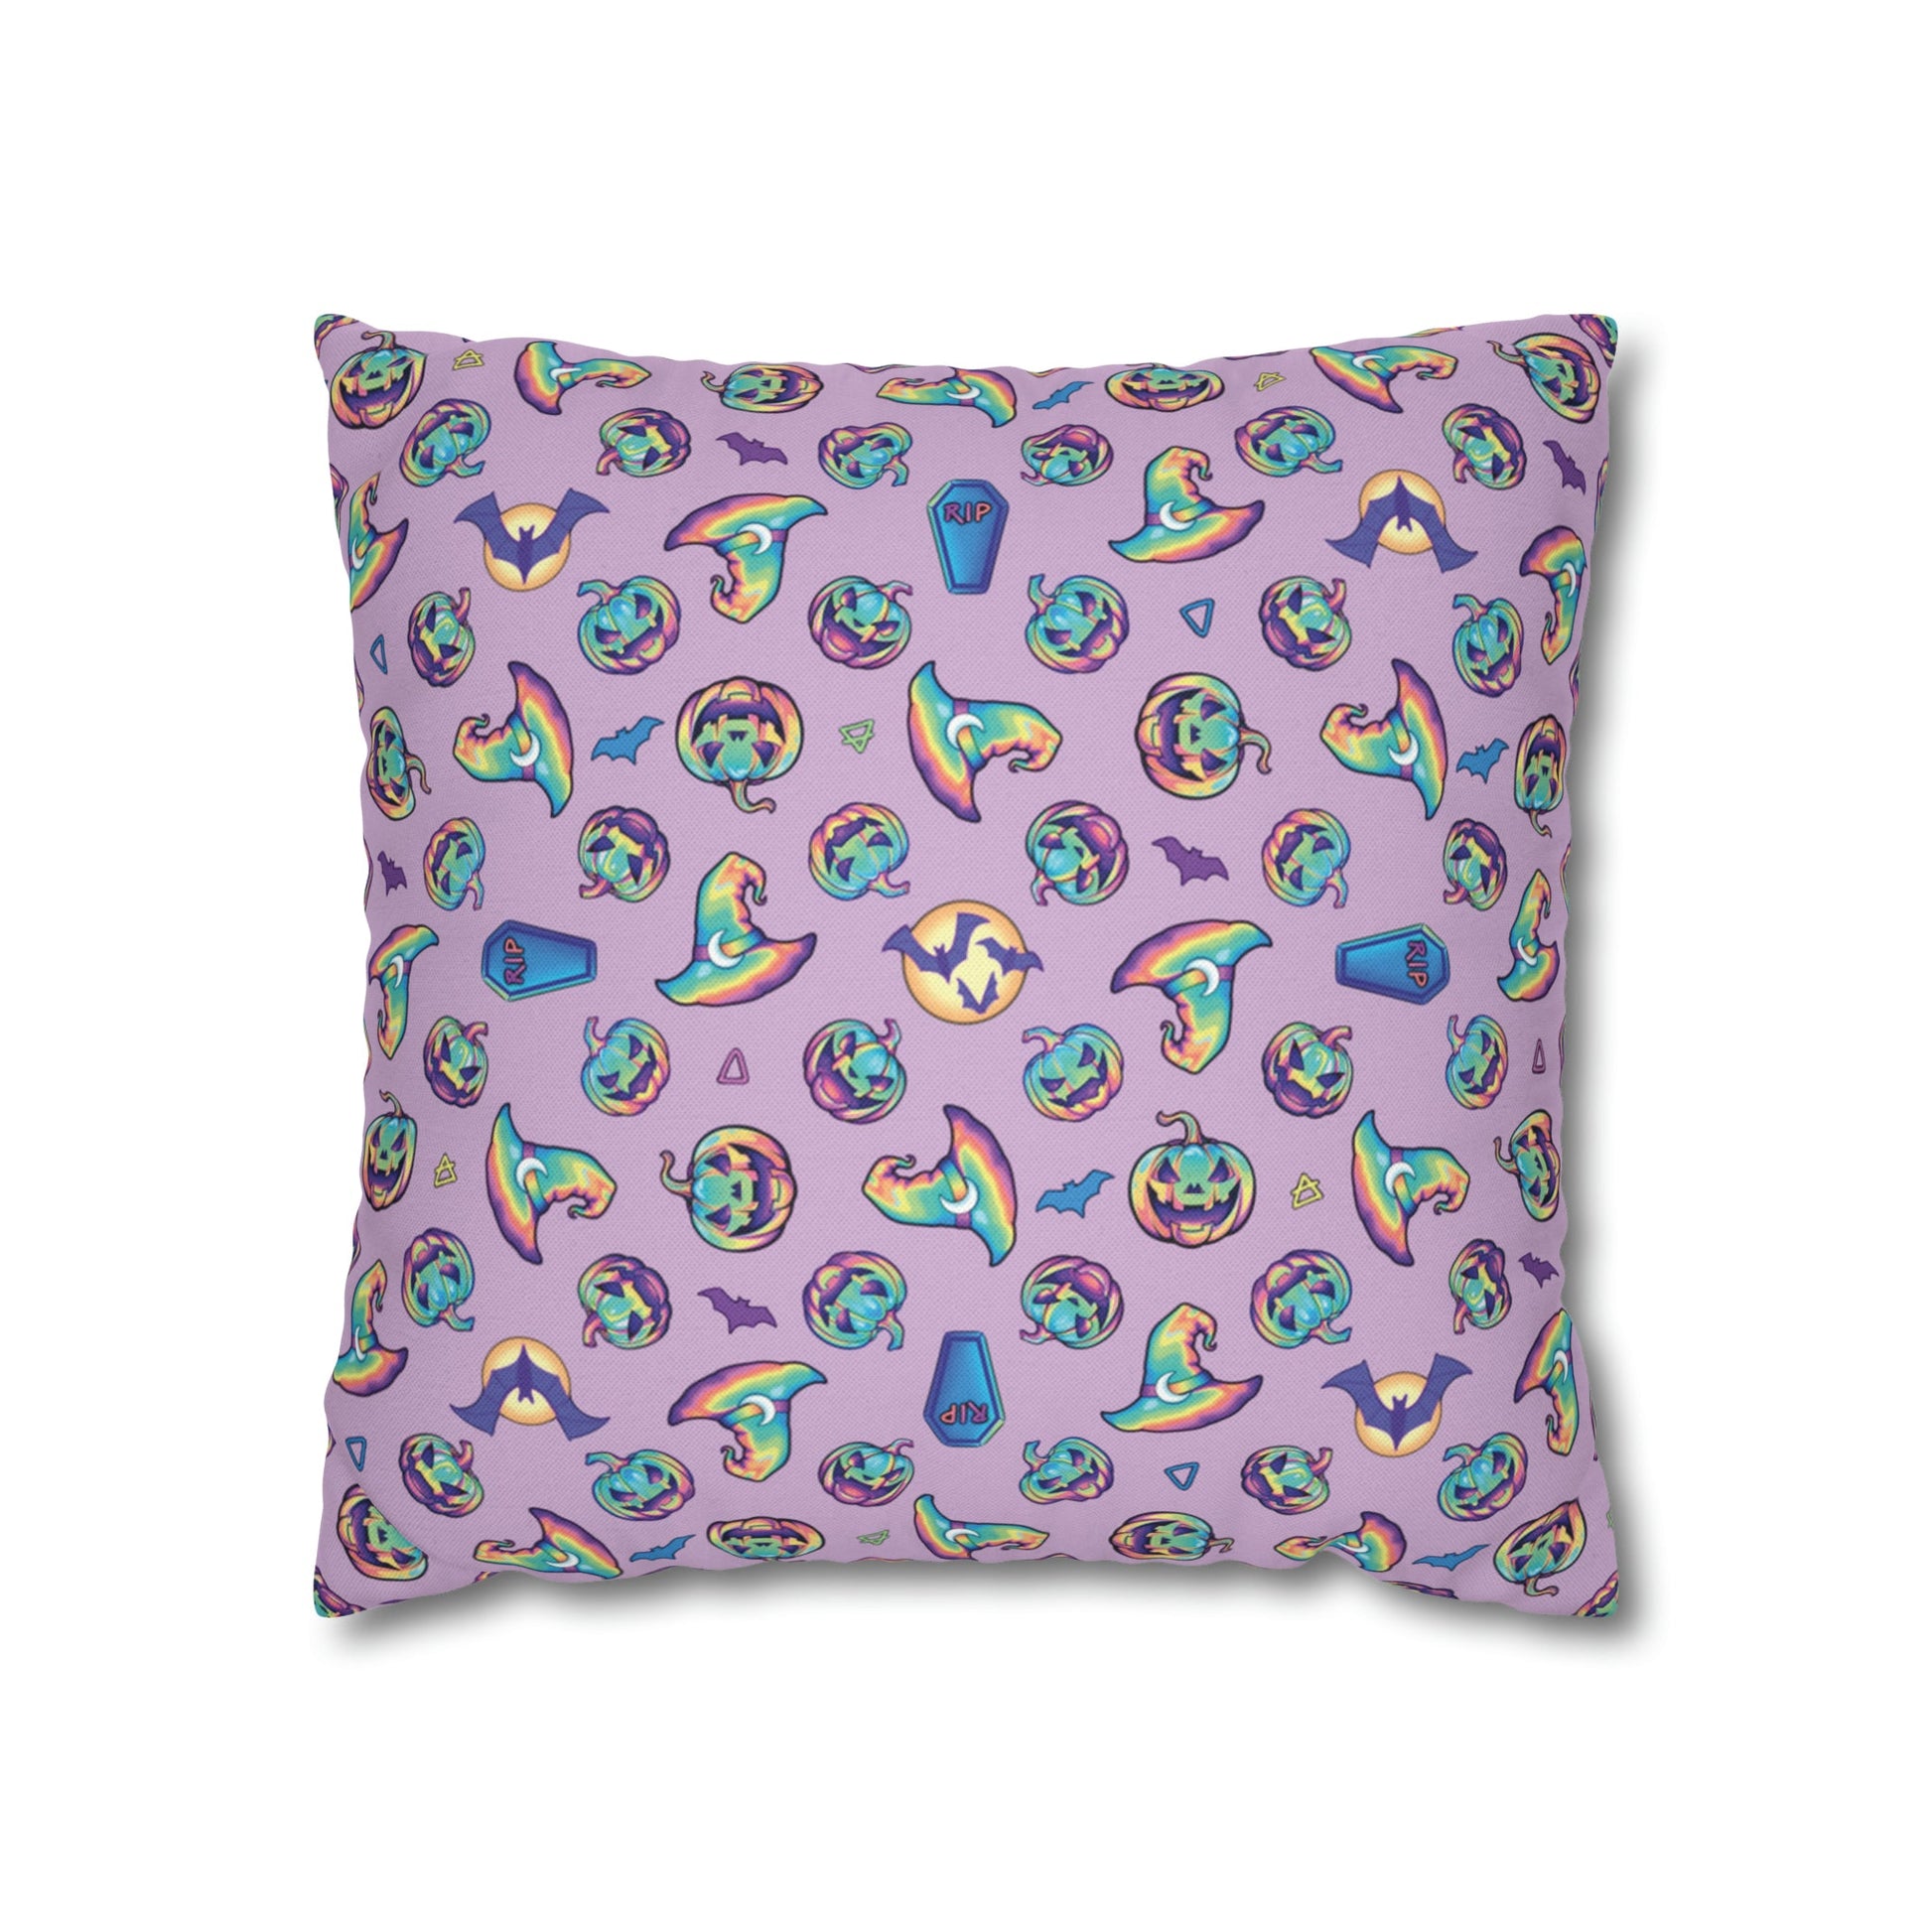 Jack-o’-Lanterns, Bats & Witch Hats Square Pillow Case - Purple - Driftless Enchantments